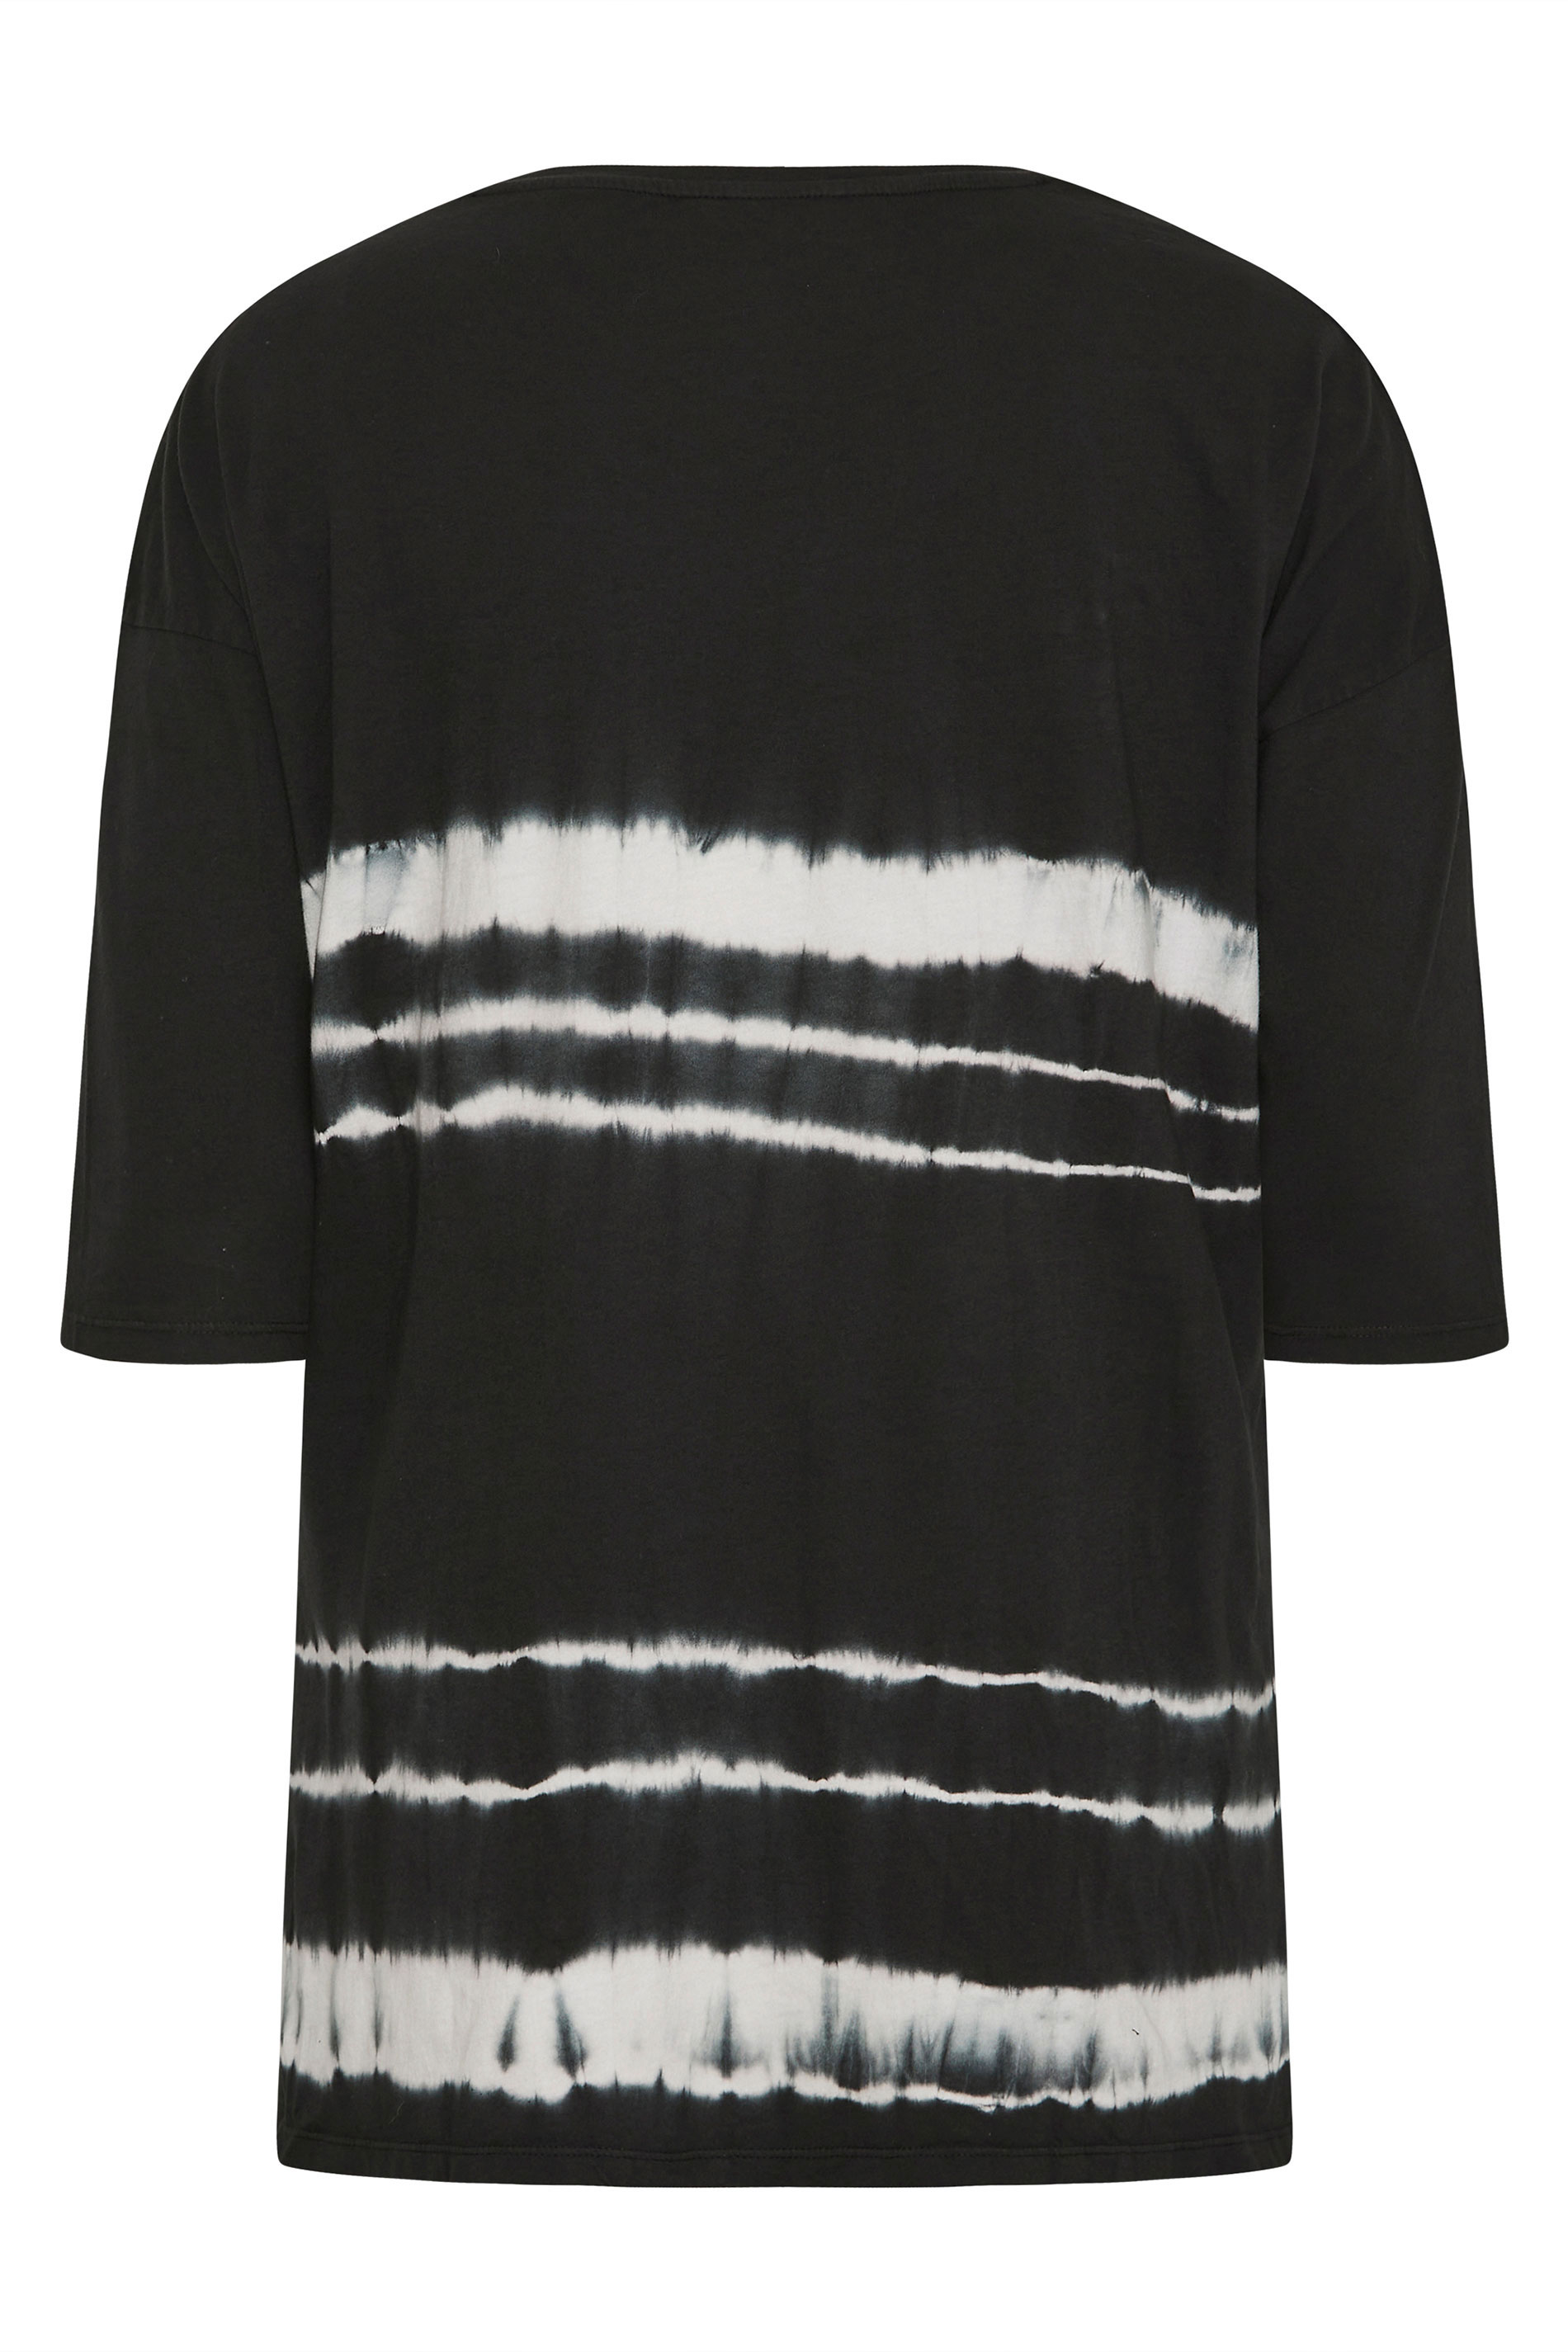 Grande taille  Tops Grande taille  T-Shirts | T-Shirt Noir Tie & Dye Graphique 'Astrologie' - ZI27394